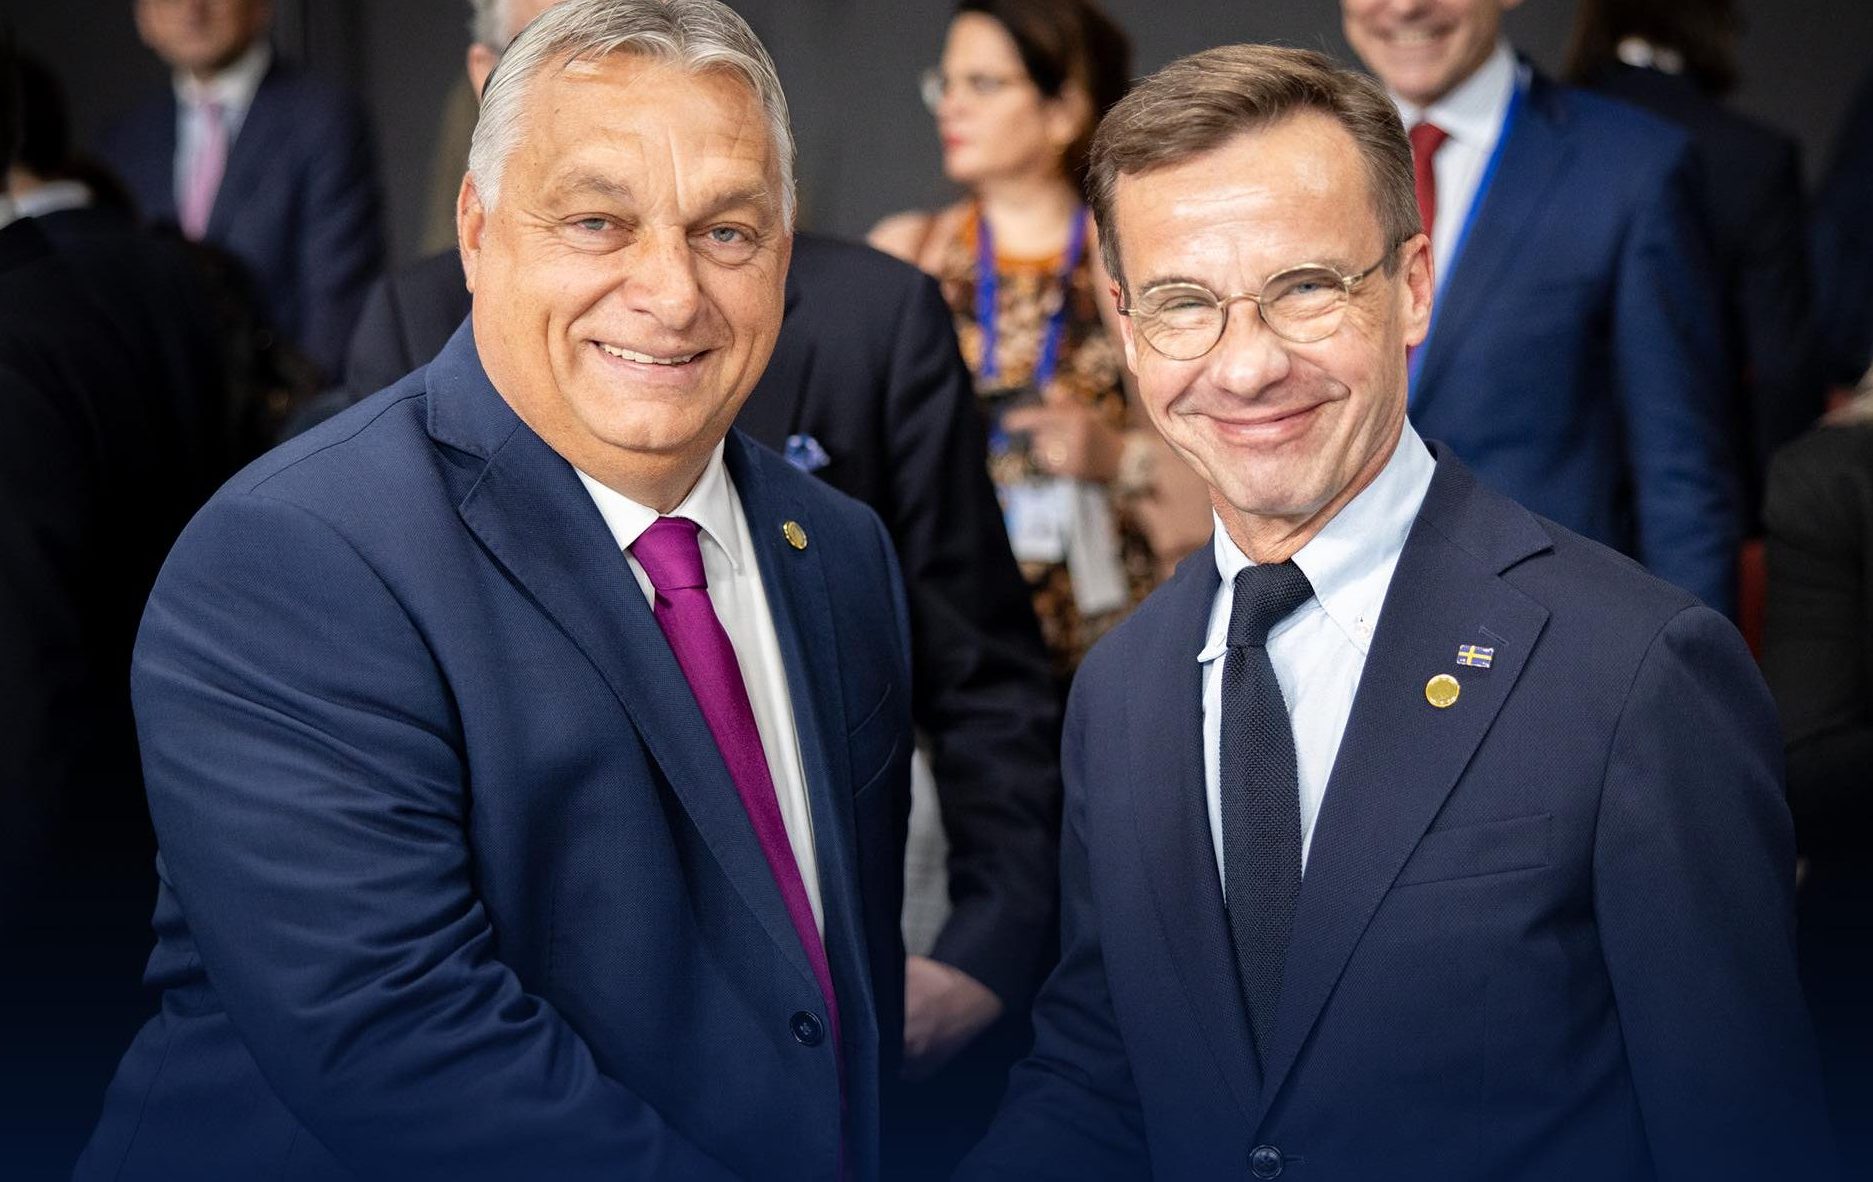 Viktor Orbán Invites Swedish Counterpart to Hungary